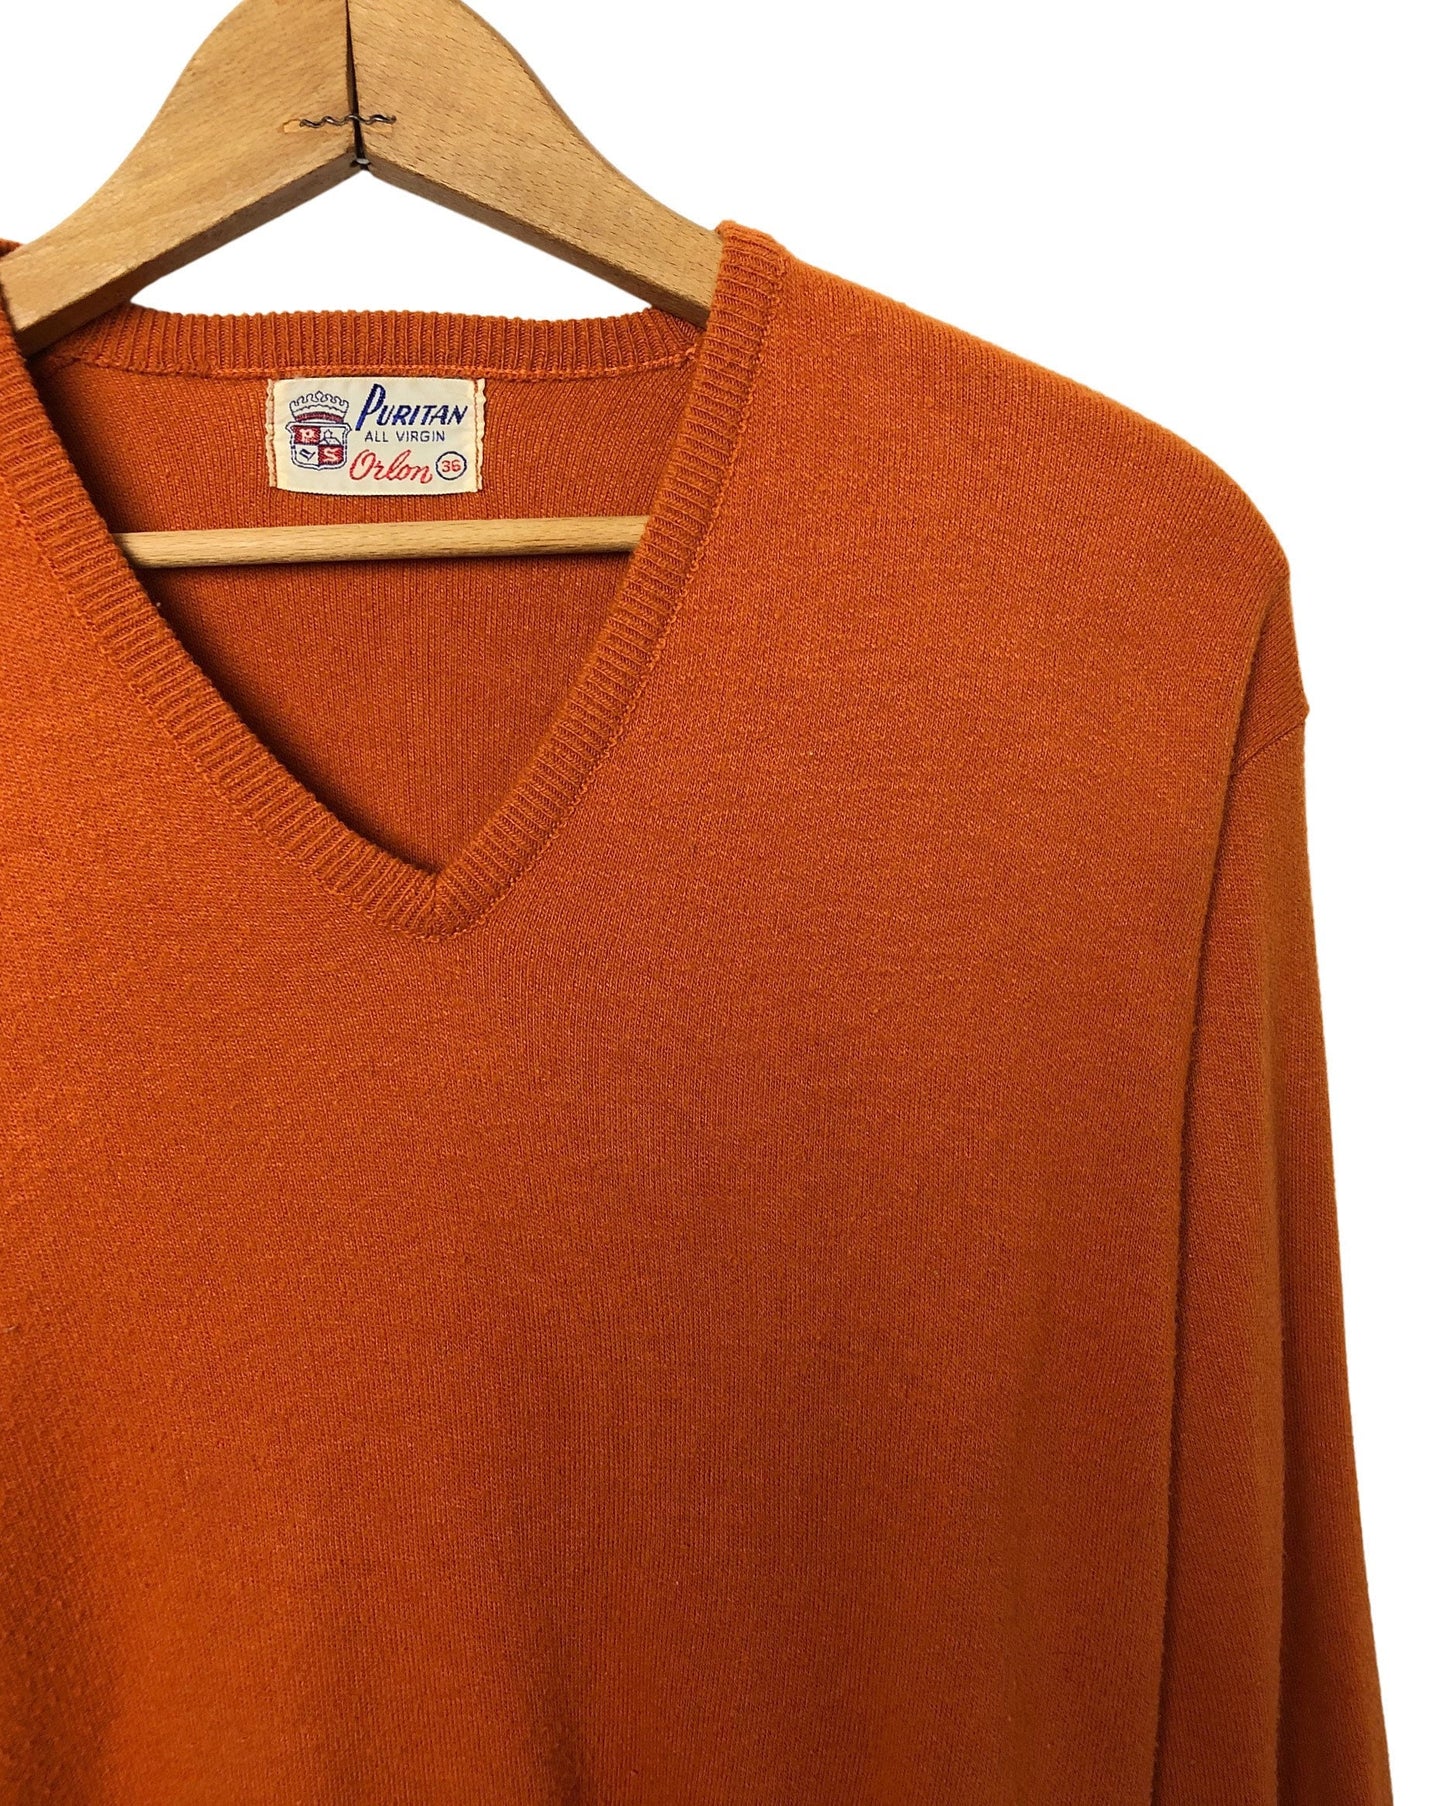 Vintage 60’s Pumpkin Puritan All Virgin Orlon Retro V-Neck Sweater Size Large